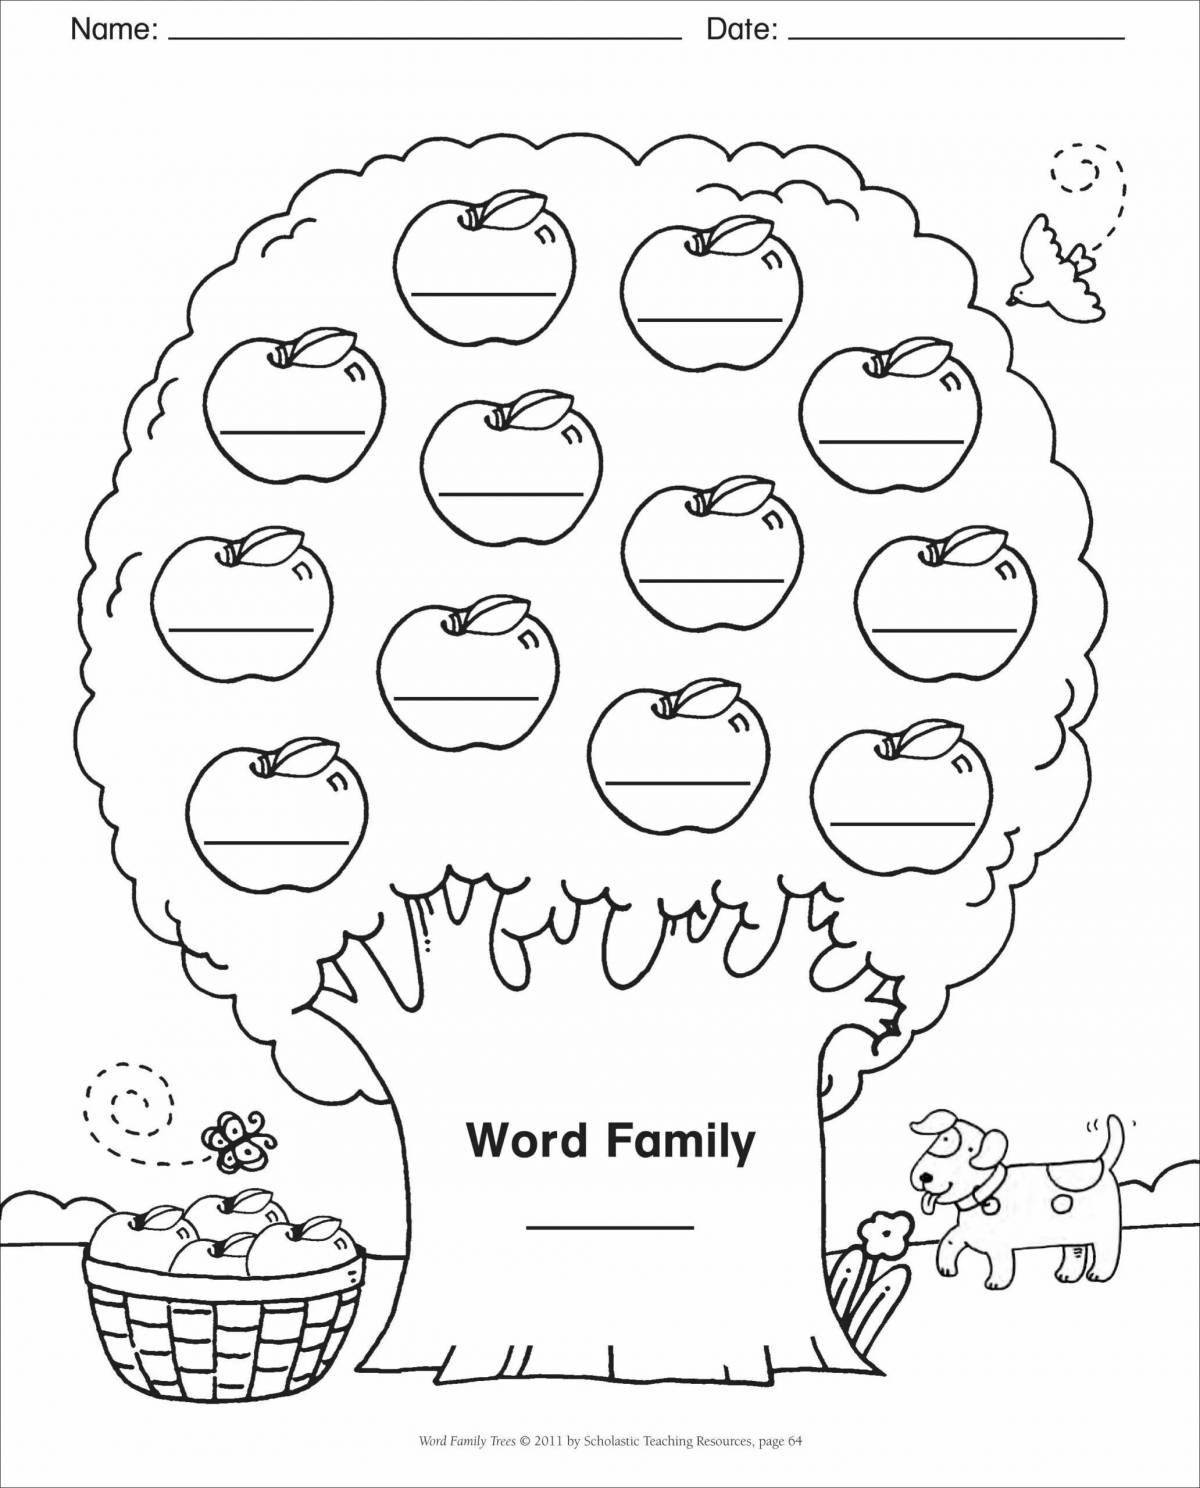 Fantastic family coloring book